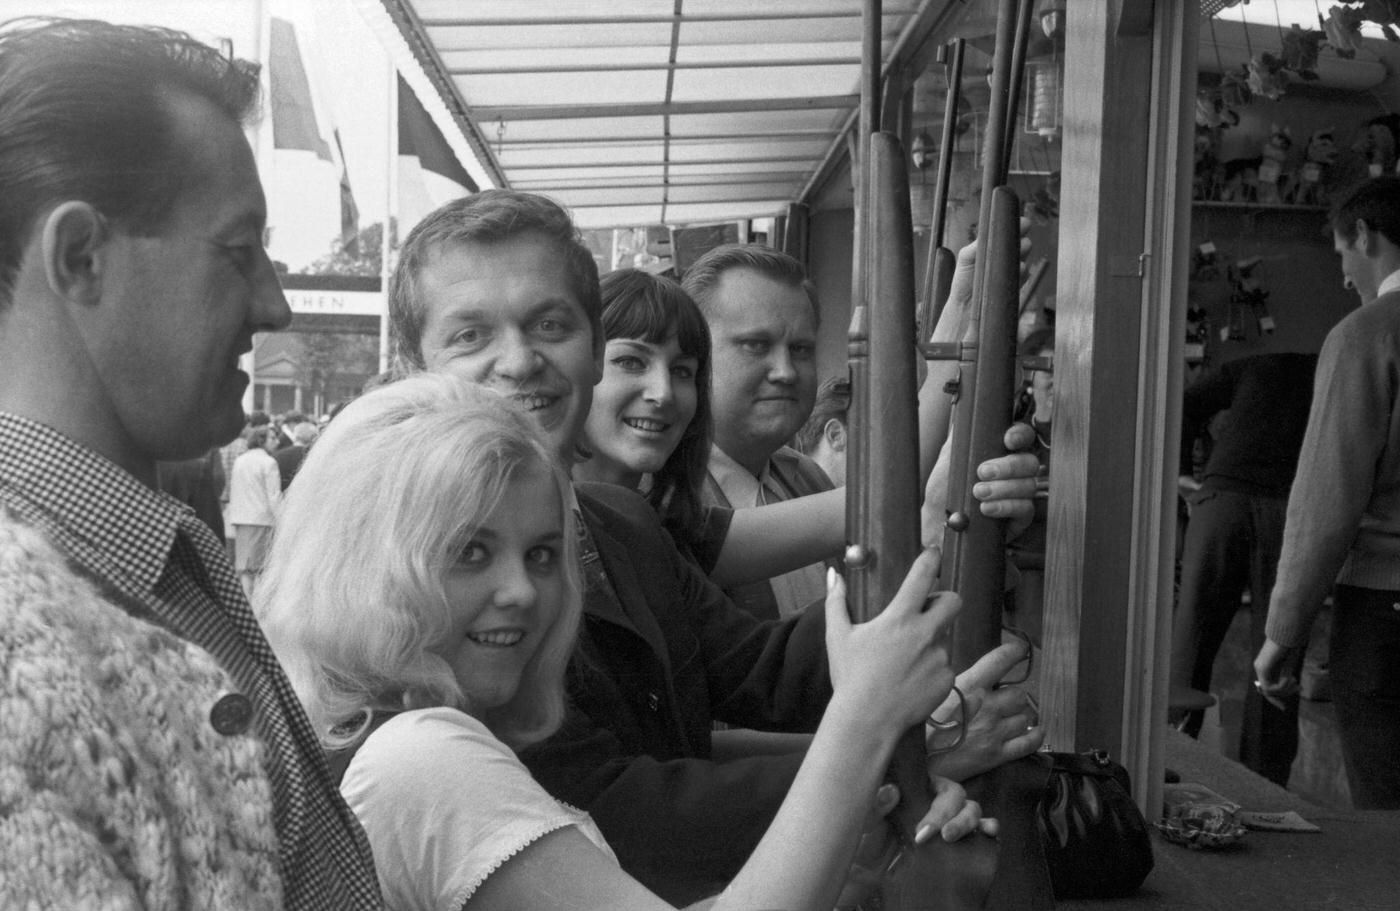 Celebrities Jessy, Maria Duval, Joe Raphael, Heinz Jürgens at Munich Oktoberfest. 1960s.